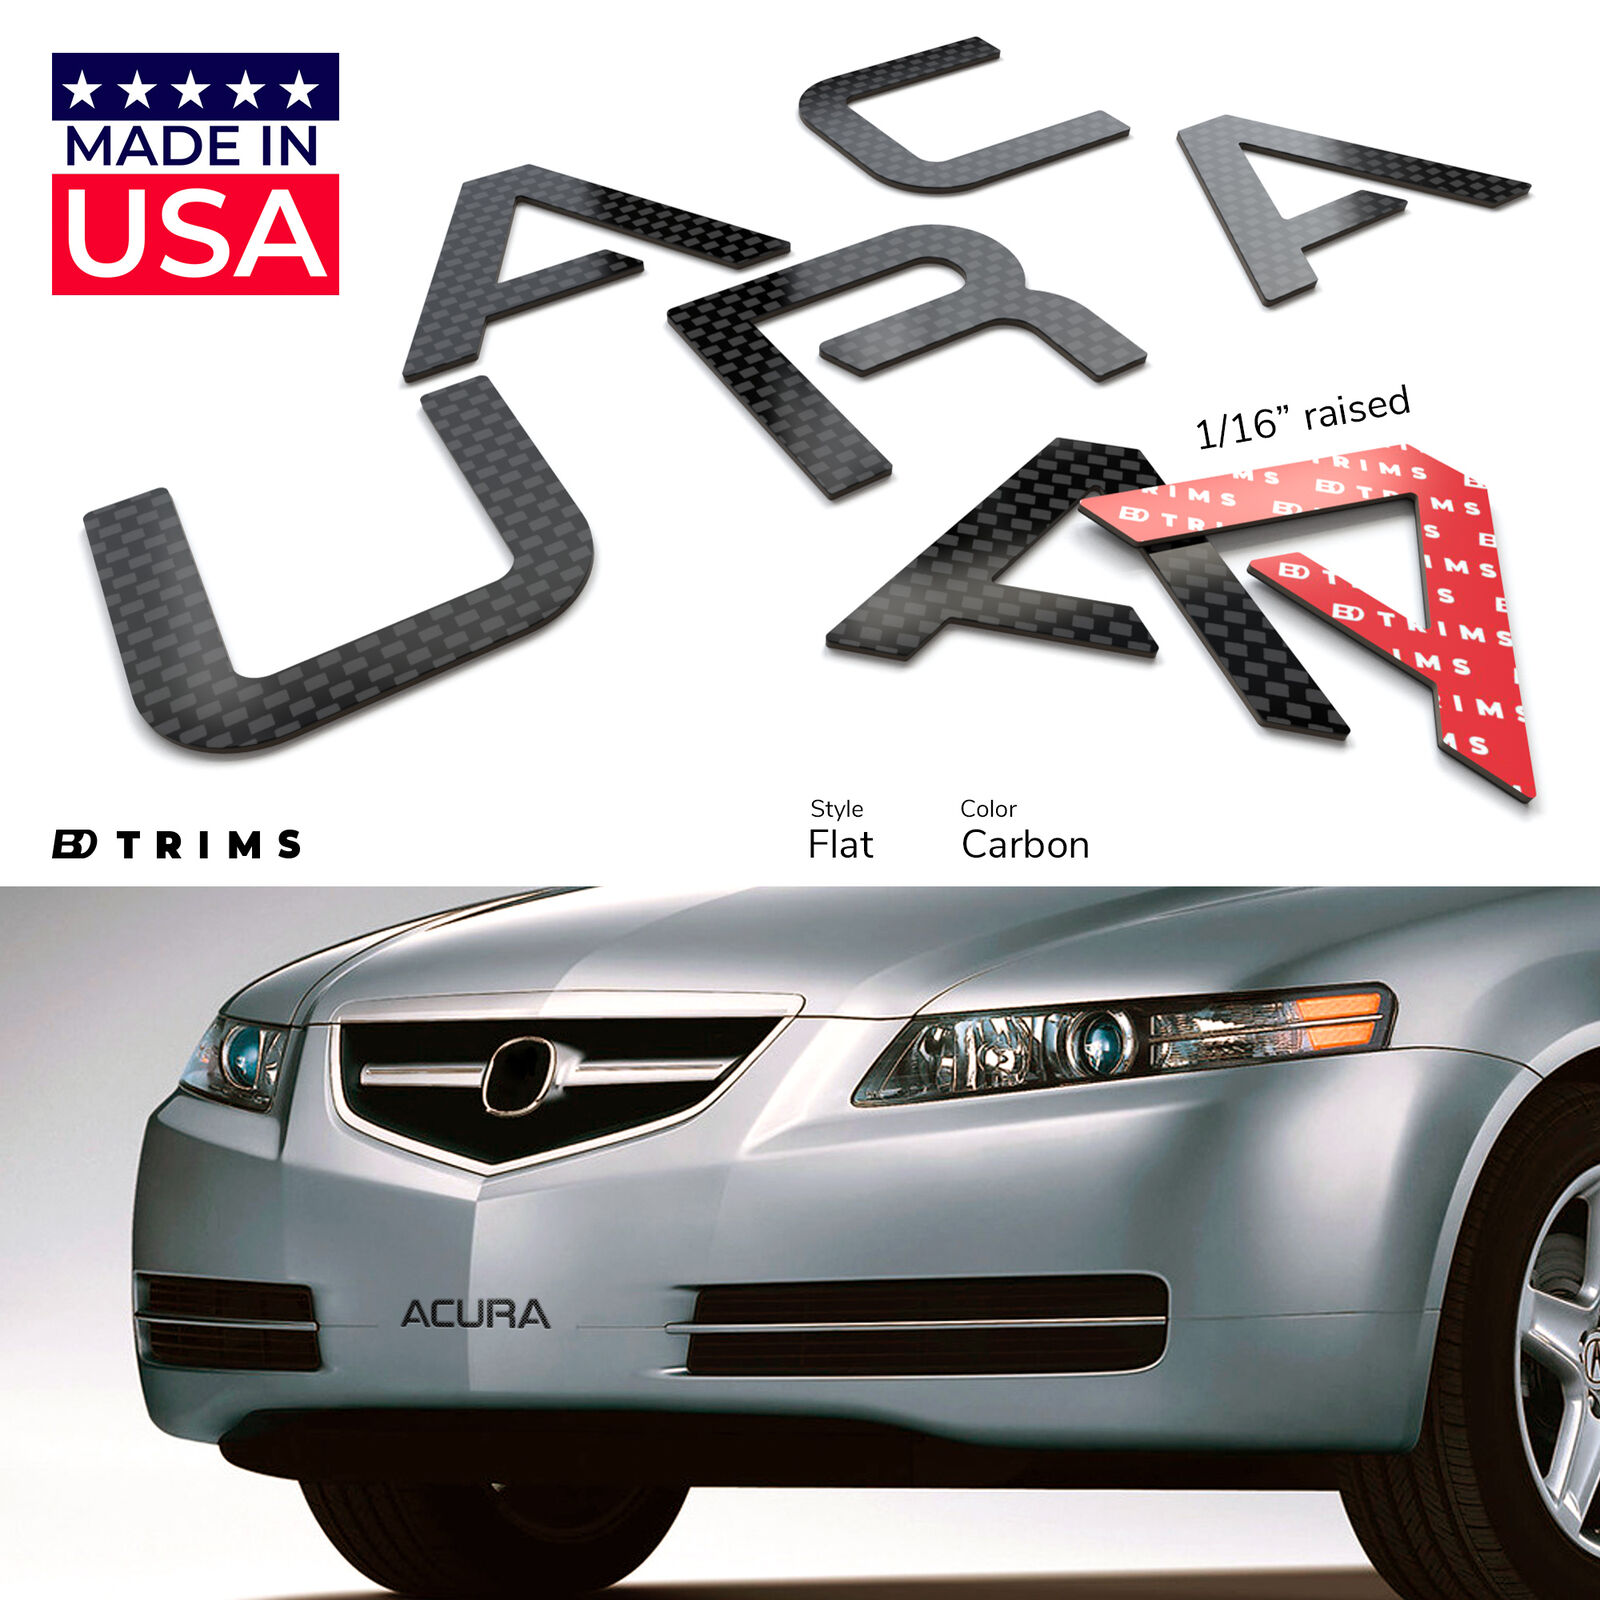 Carbon Fiber Raised Plastic Letters Inserts fits Acura TL 2004-2008 Front Bumper